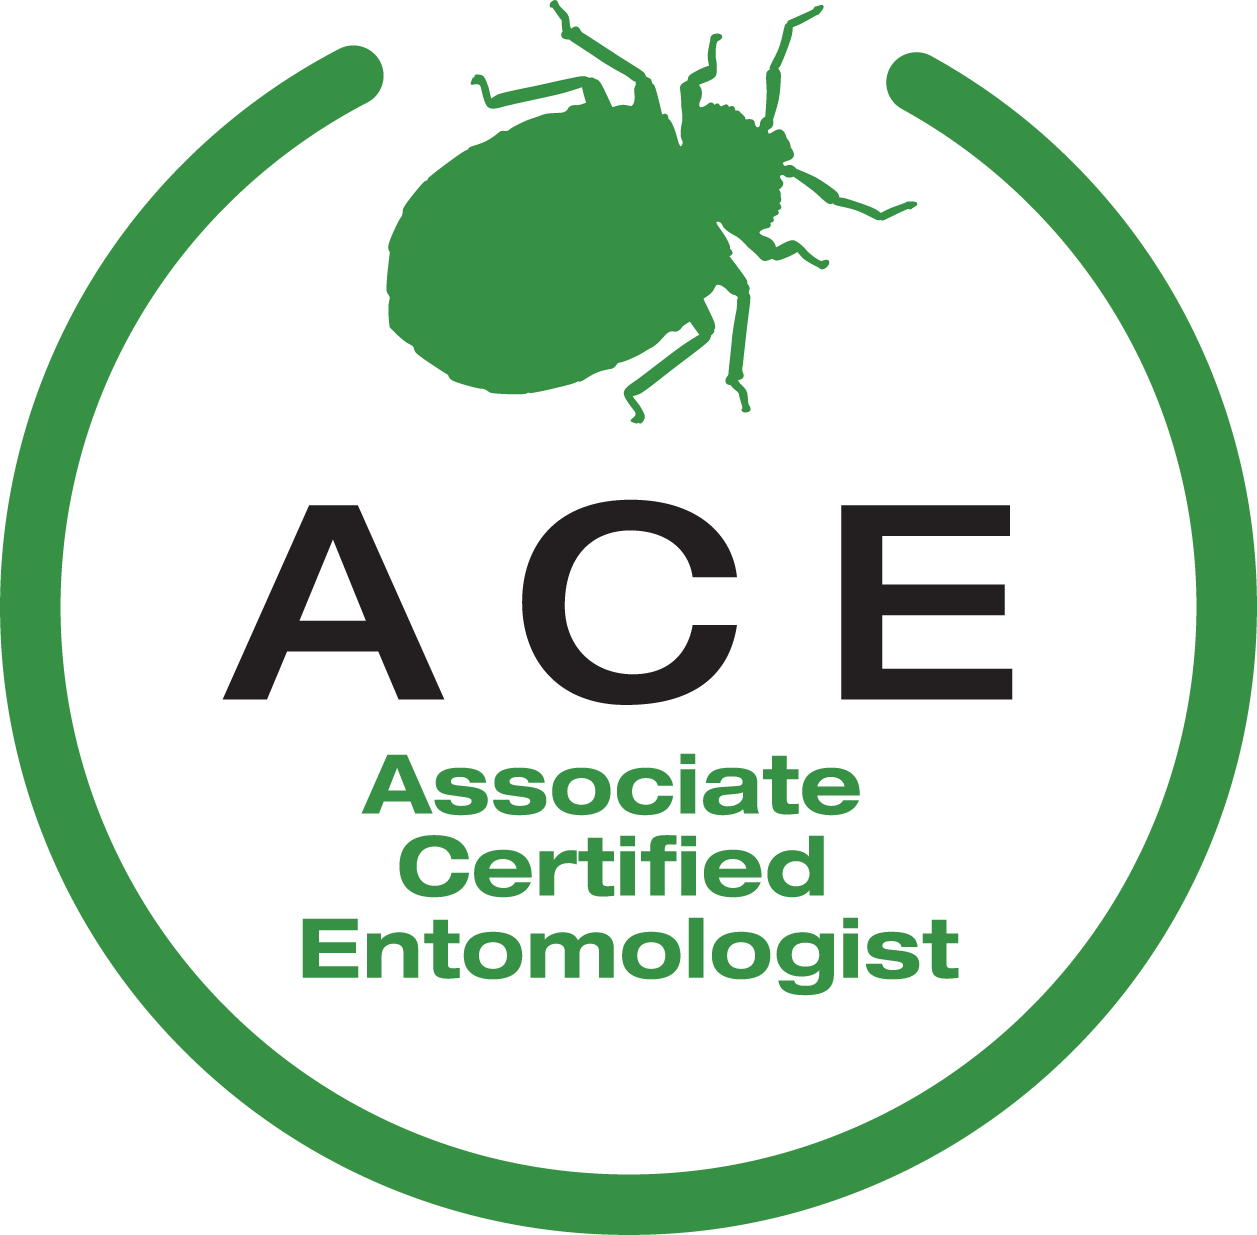 Certified Entomologist logo